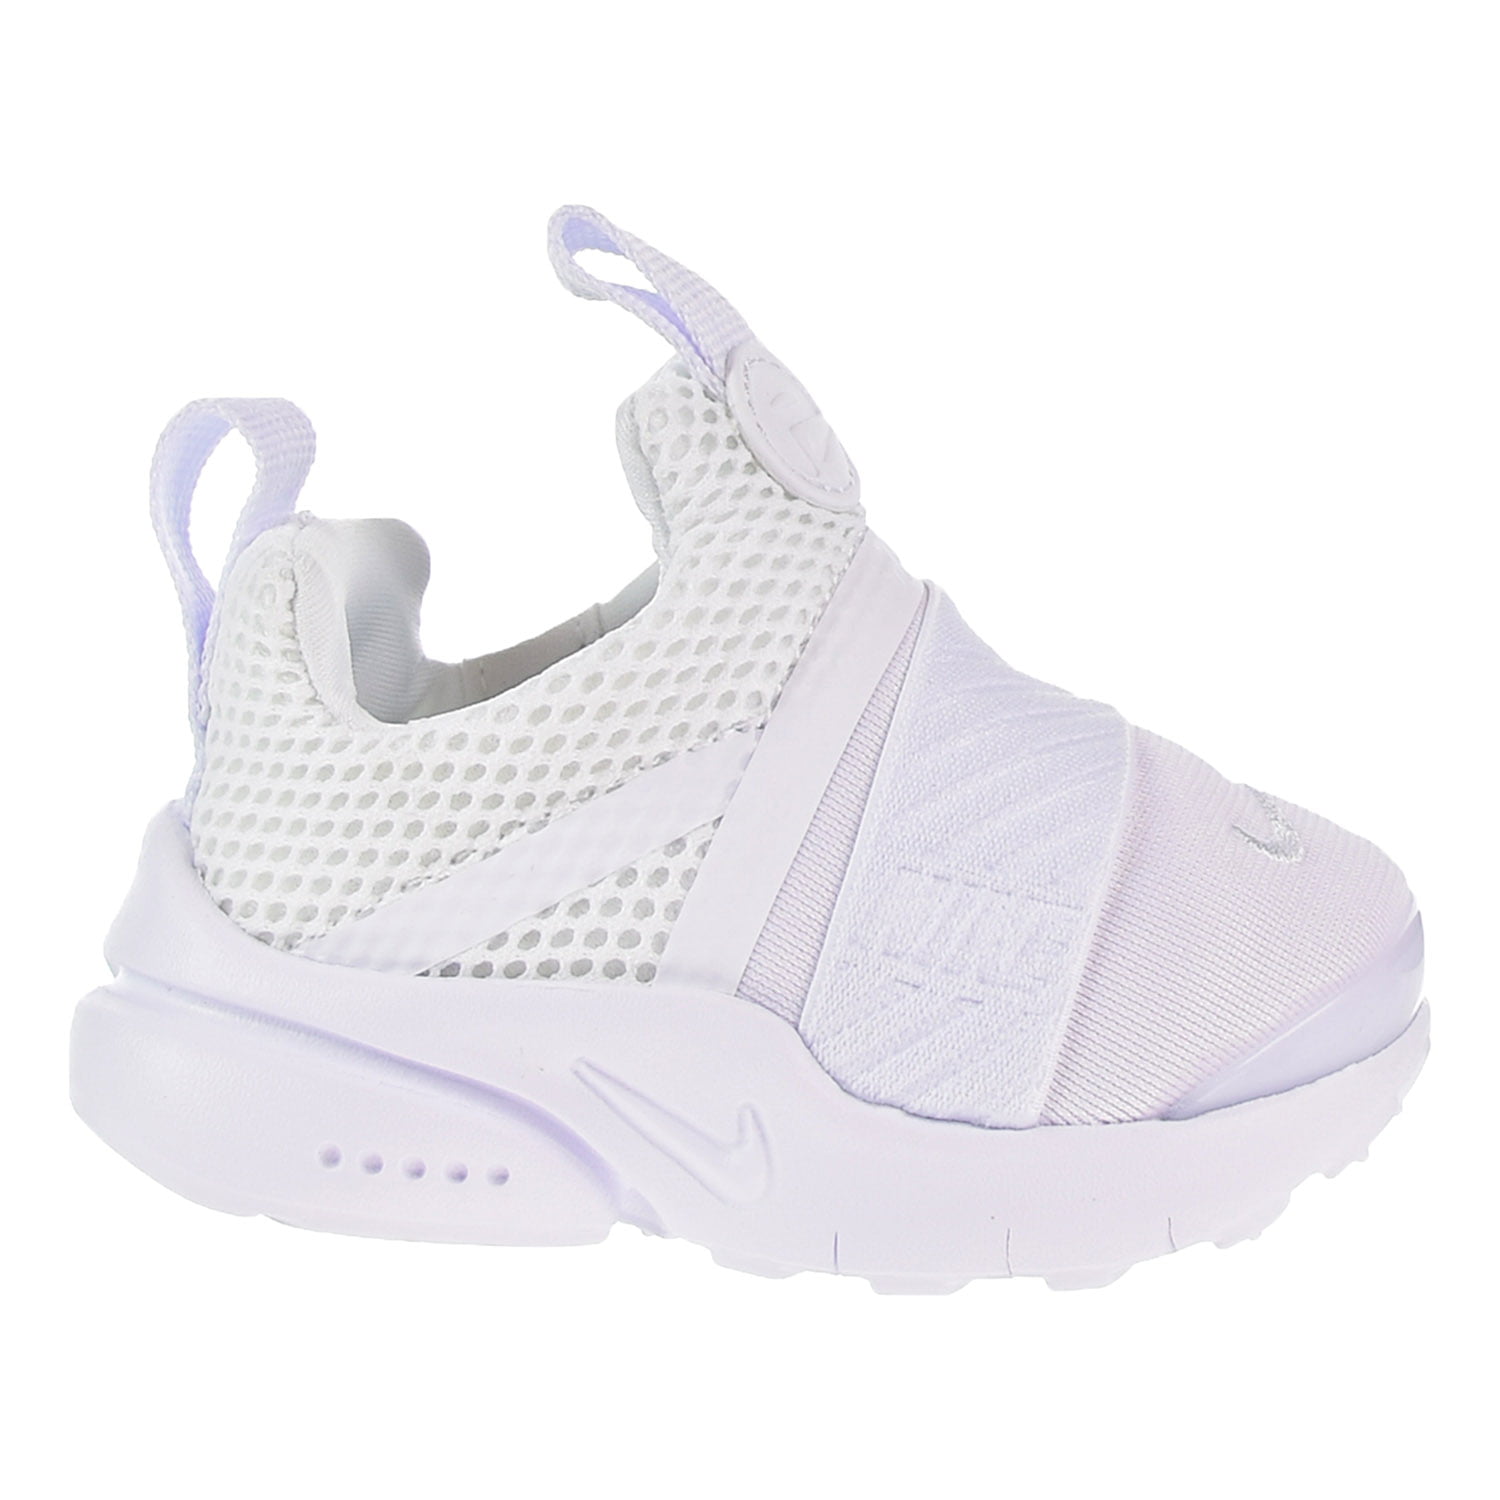 Nike Presto Extreme Toddler's Running Shoes White/White Walmart.com